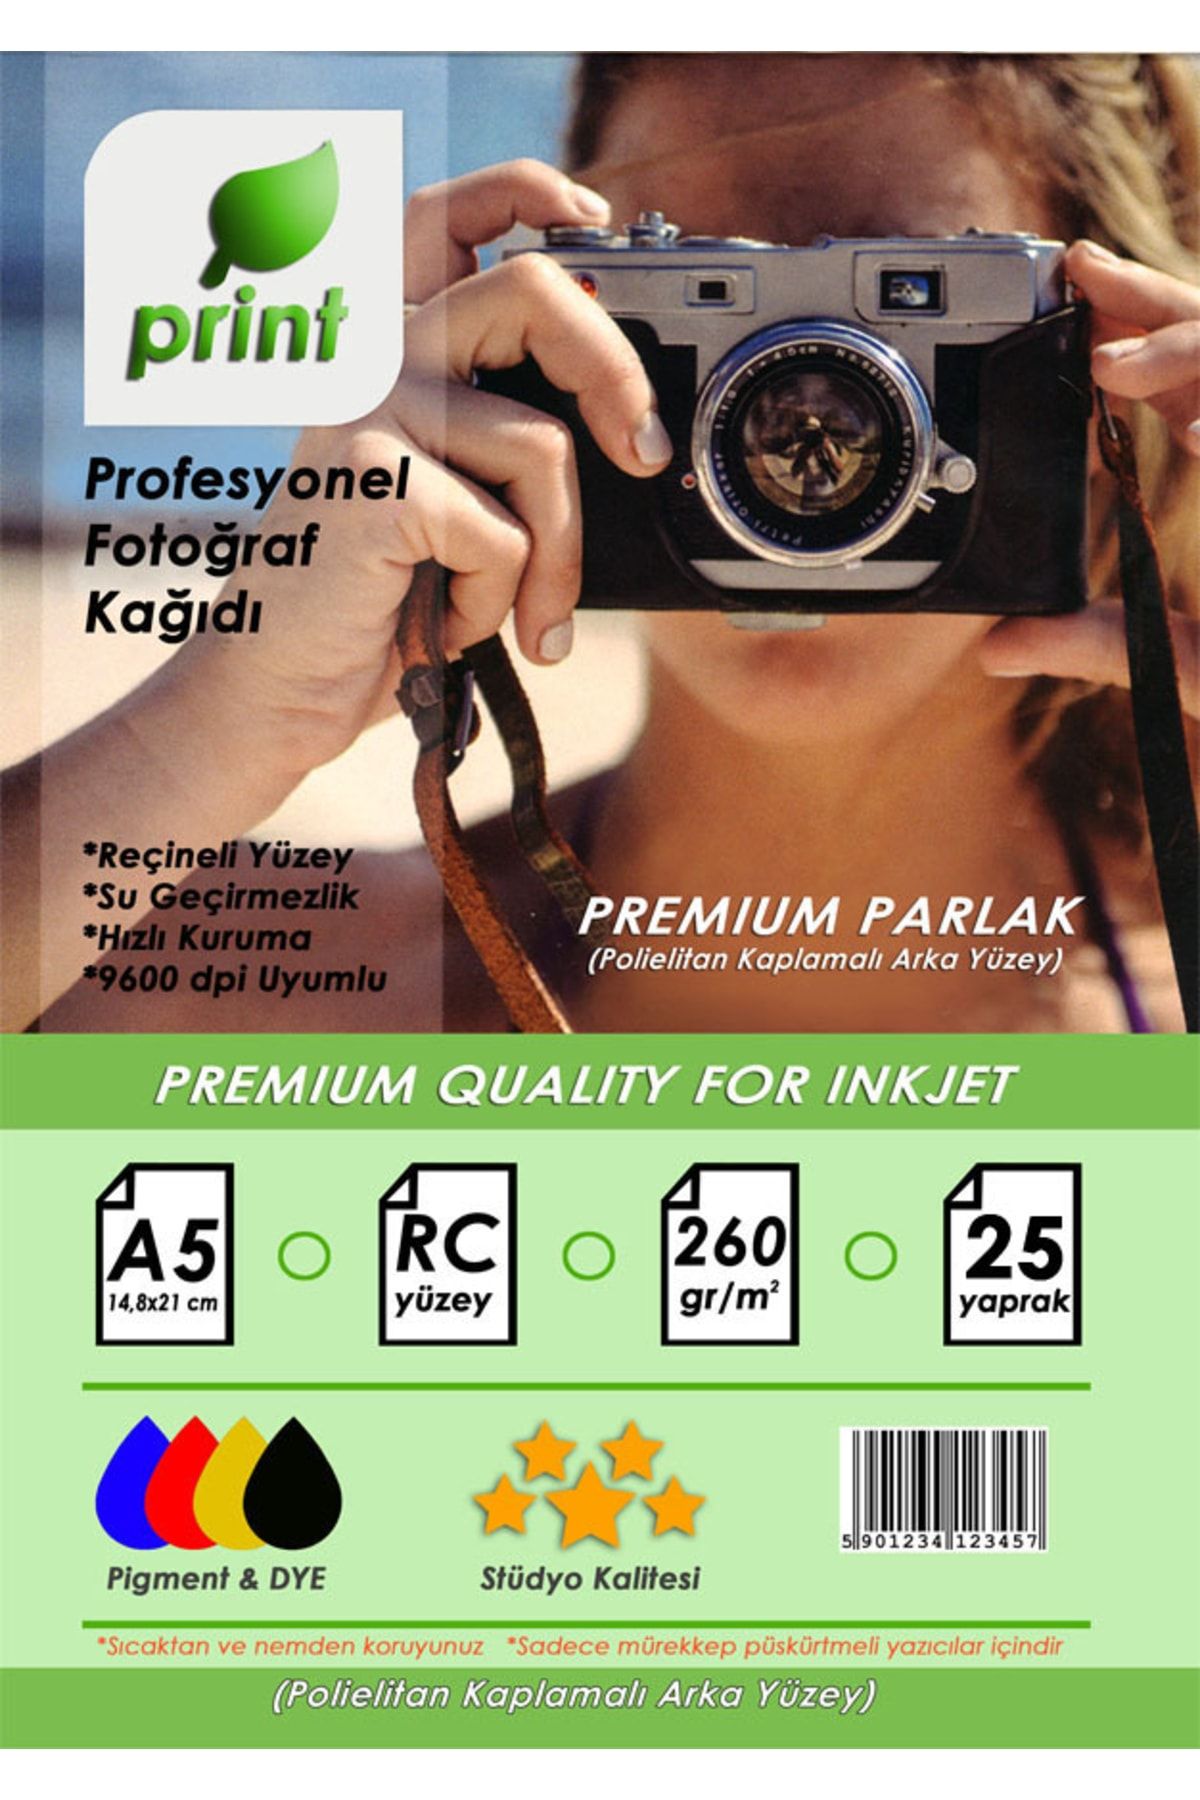 PRİNT Epson L6190 Fotoğraf Kağıdı Premium Parlak 260 gr A5 (15X21) 25 Yp